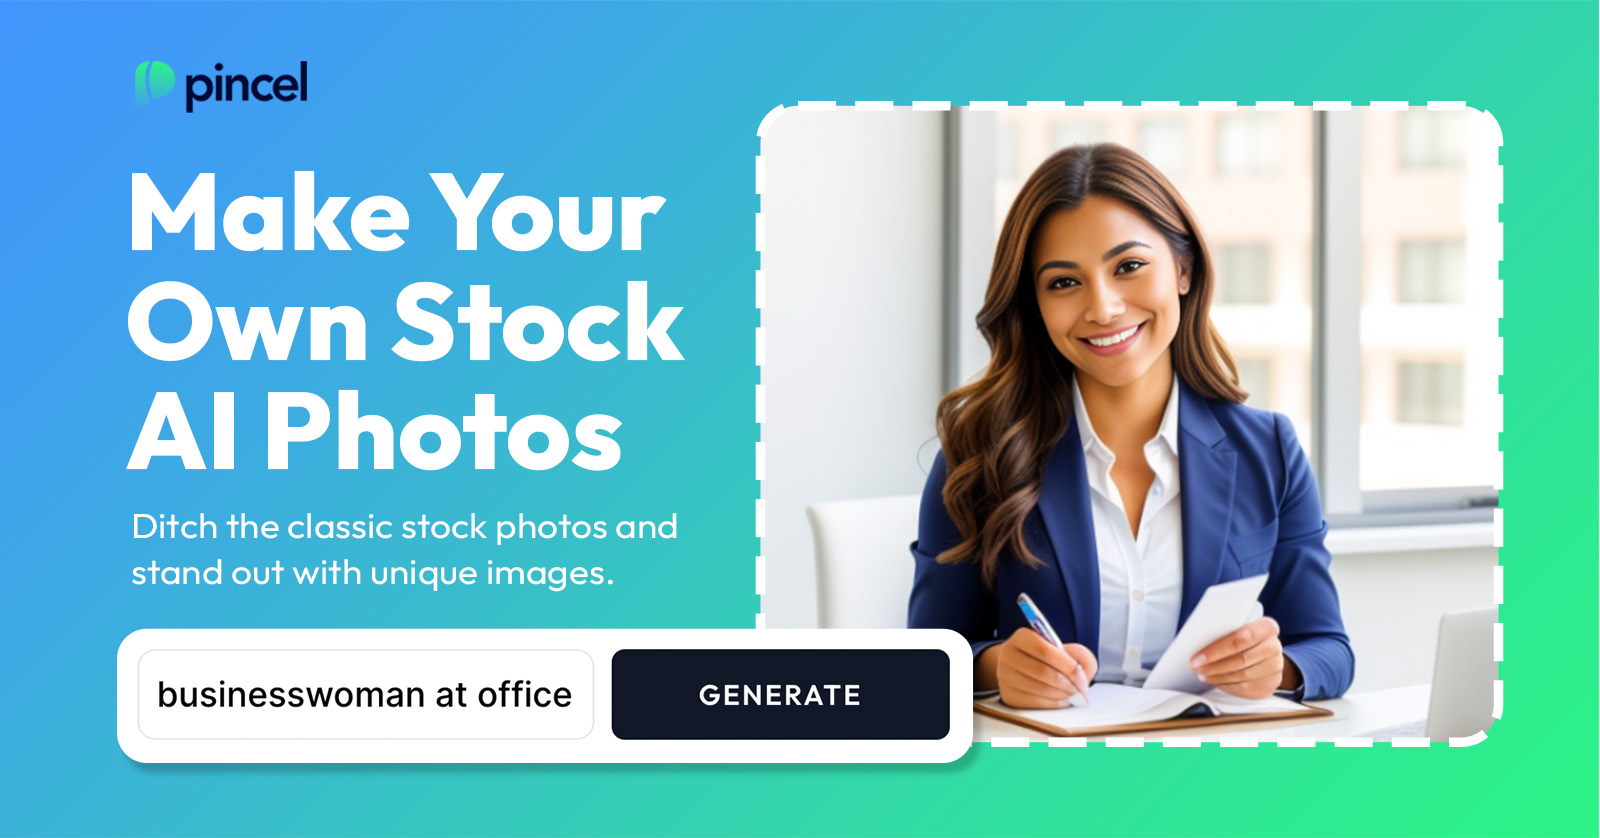 Make Your Own Stock Photos Using AI